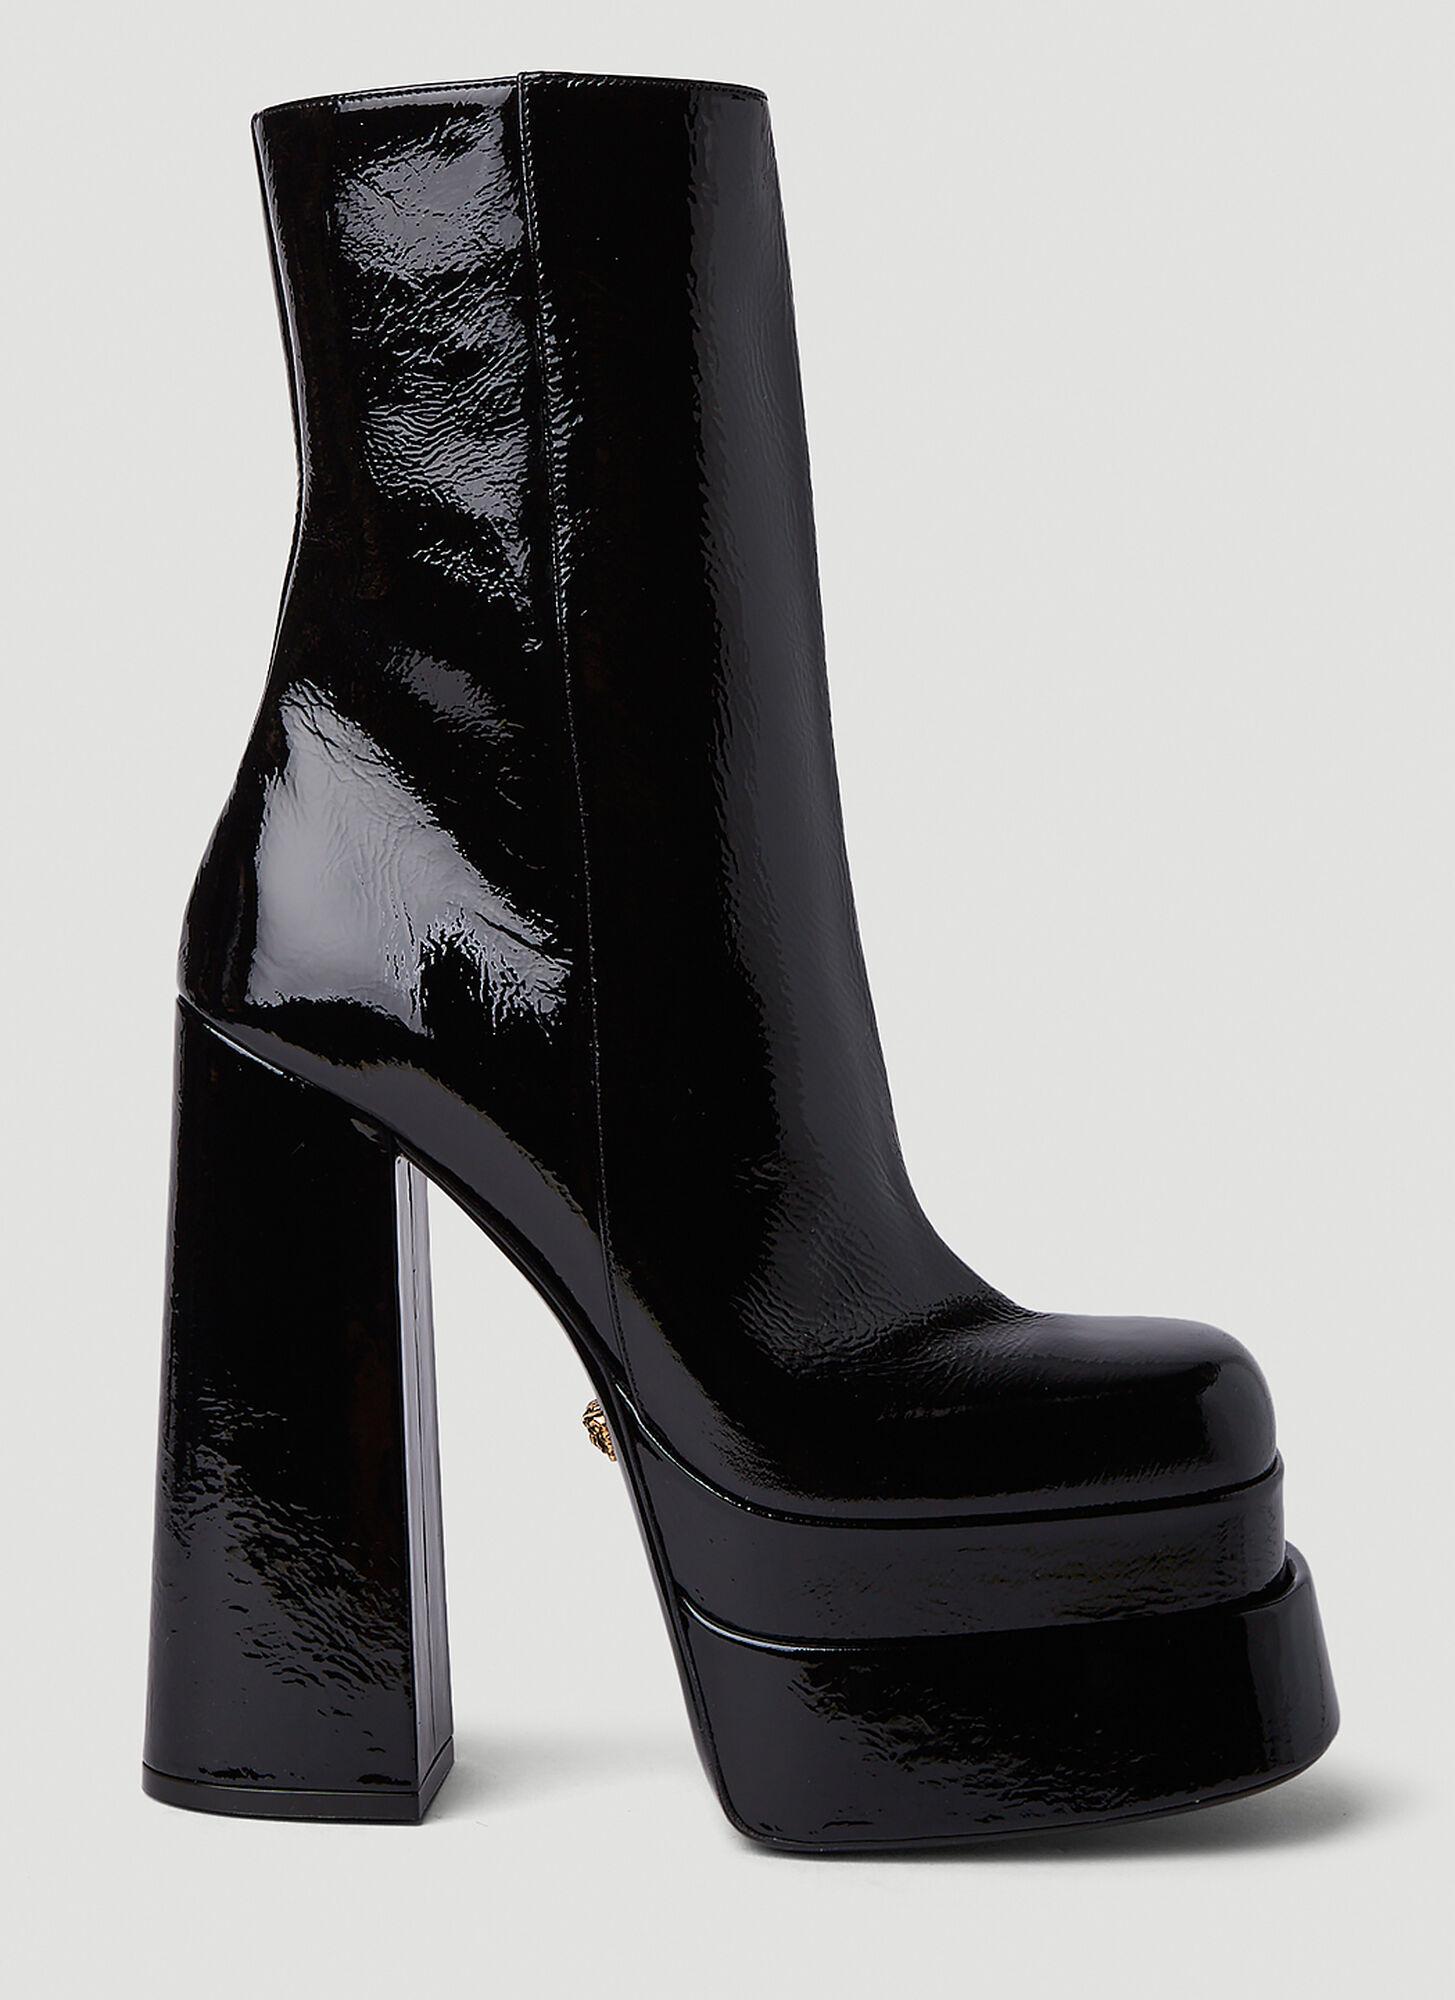 Versace Aevitas Patent Platform Boots in Black | Lyst